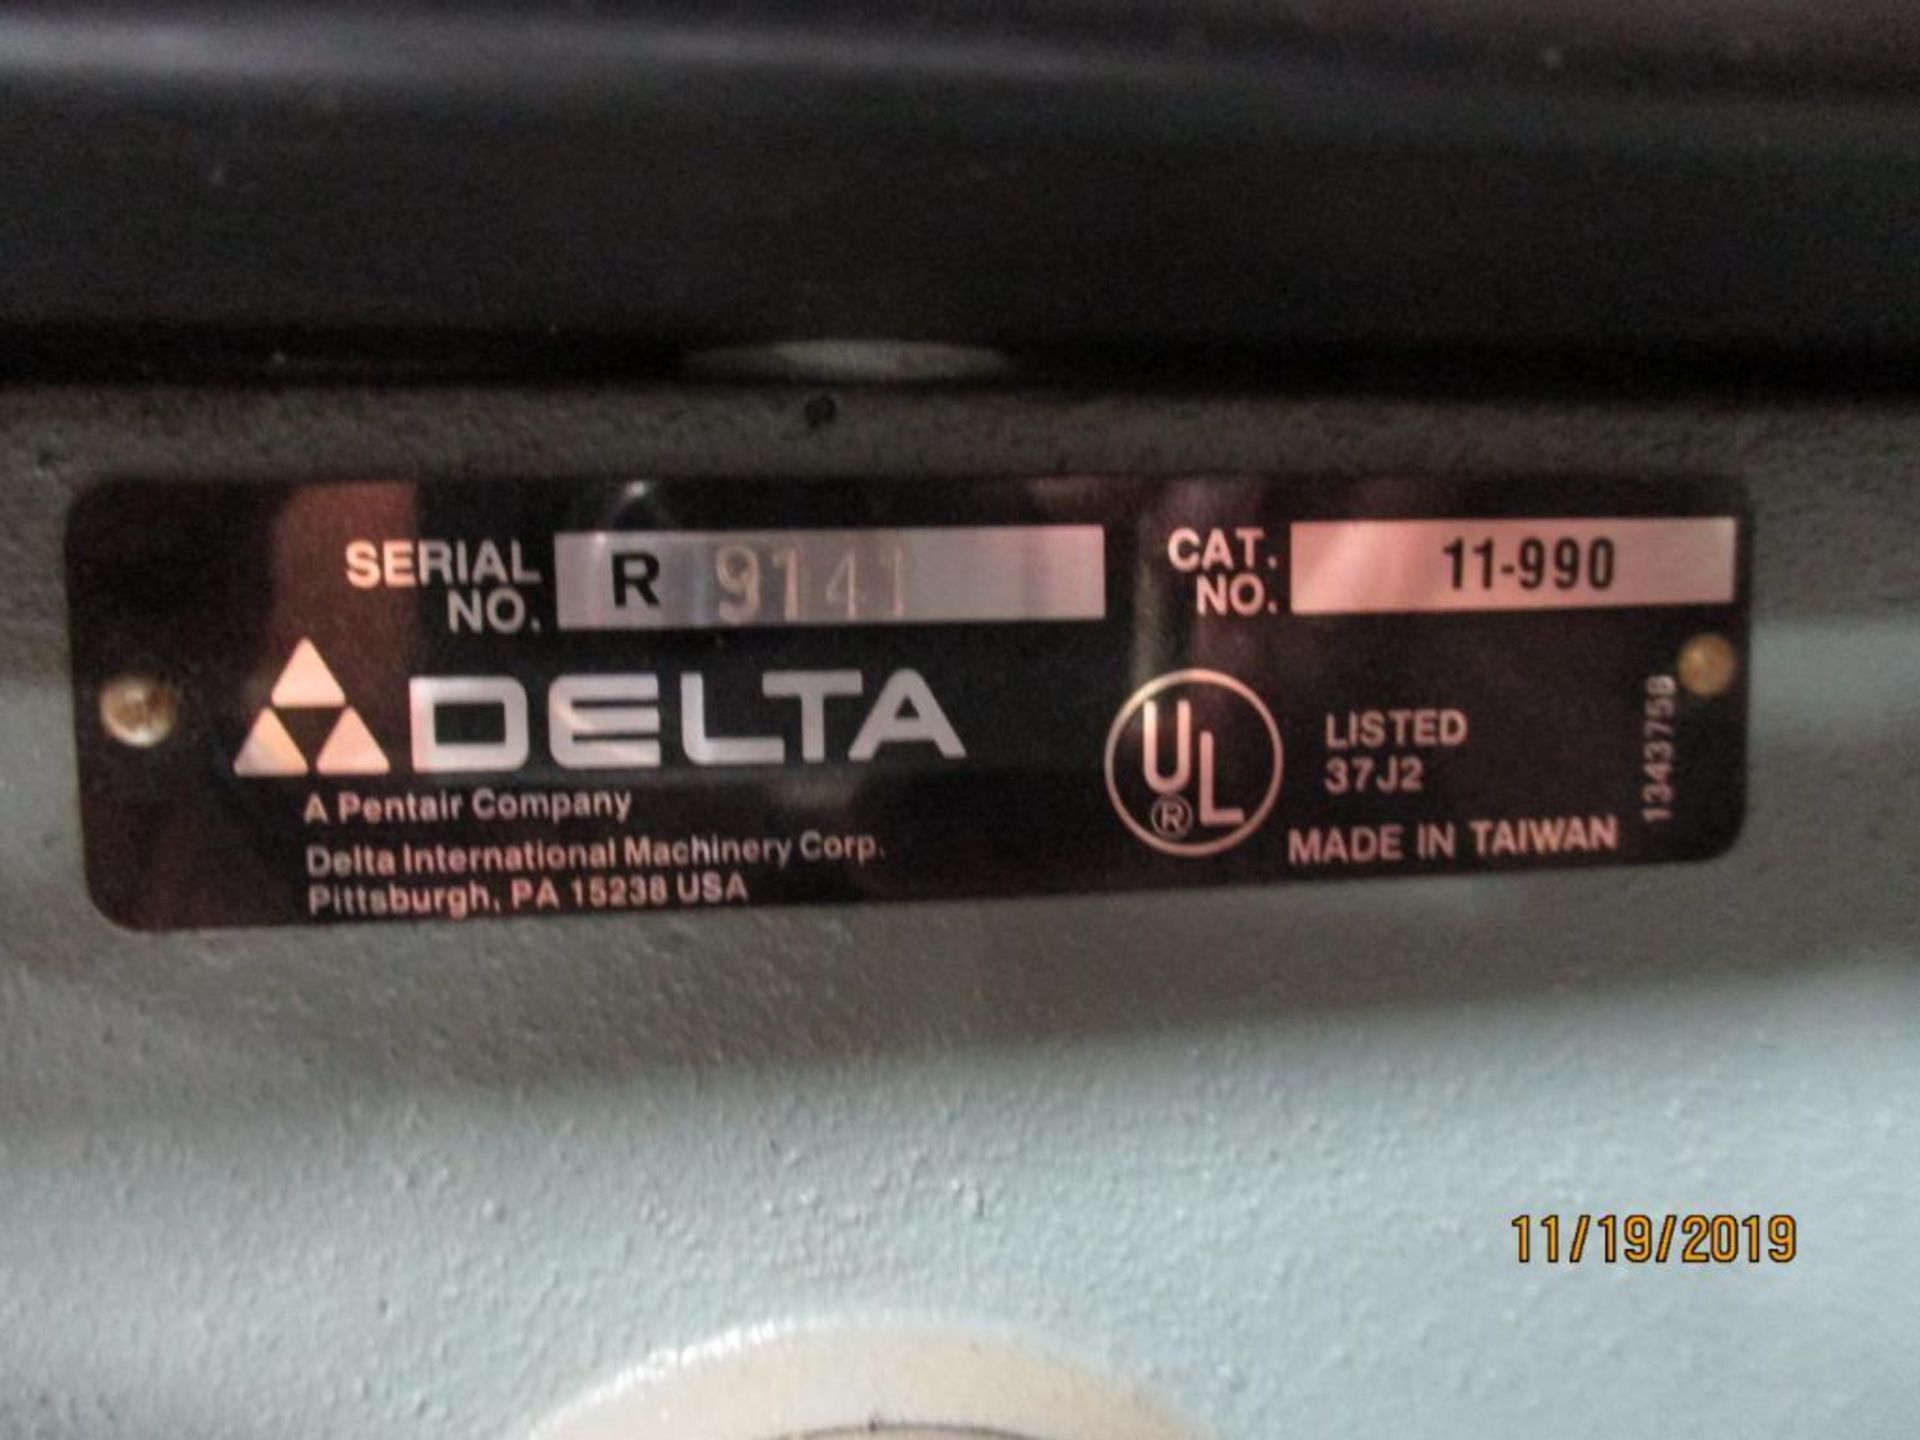 Delta Table Top Drill Press 1/2" Chuck Cat. No. 11-990 S/N R9141 - Image 4 of 5